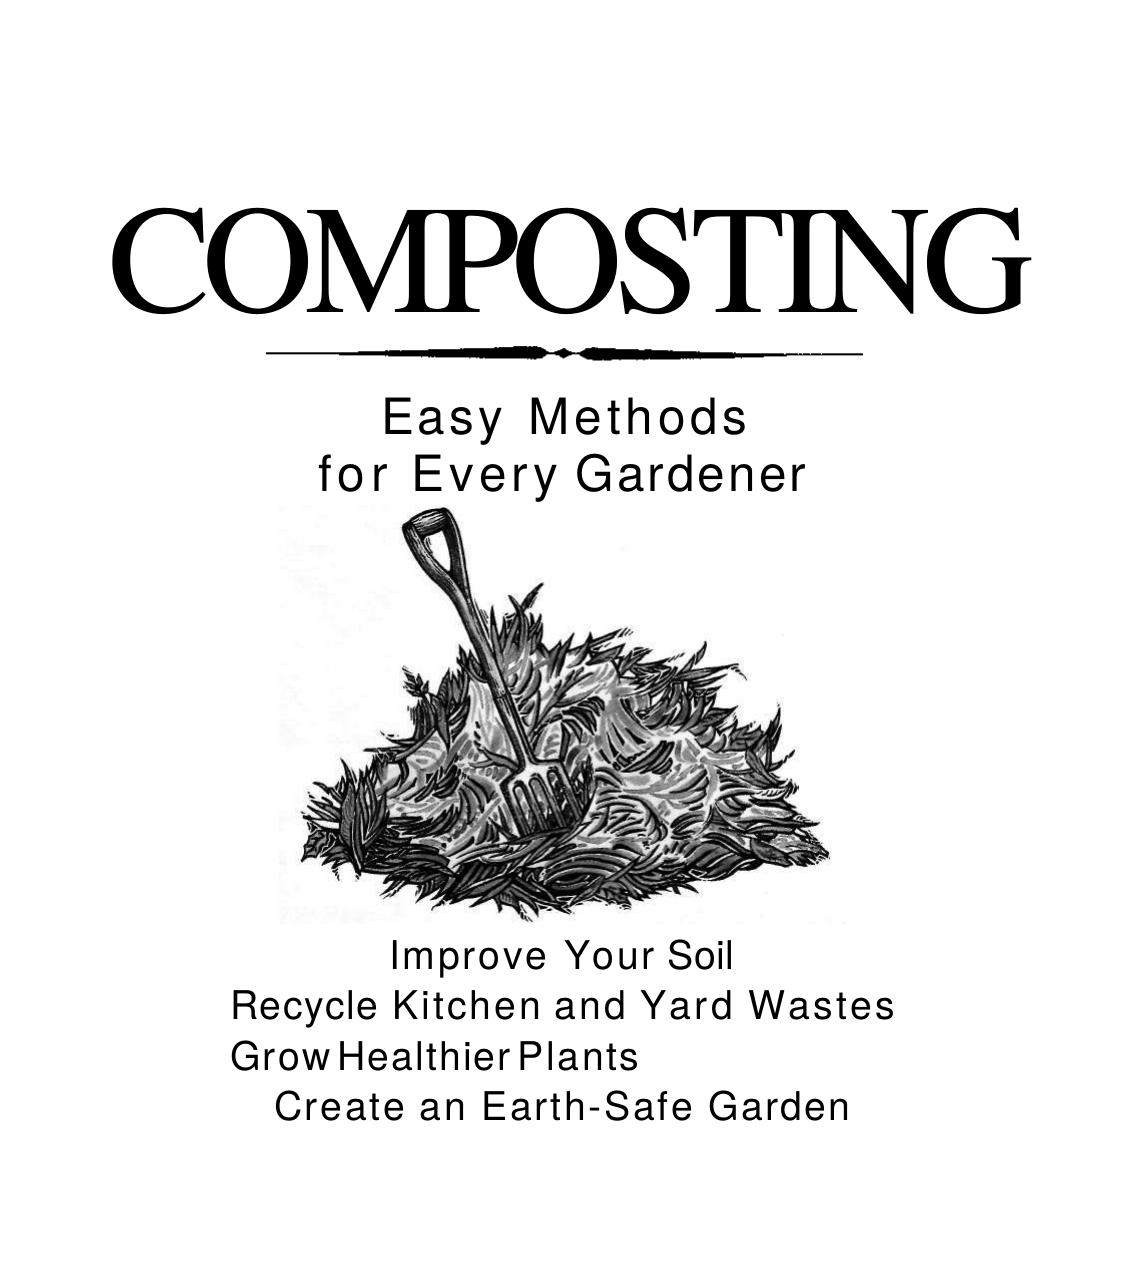 Composting by Grace Gershuny & Deborah L. Martin